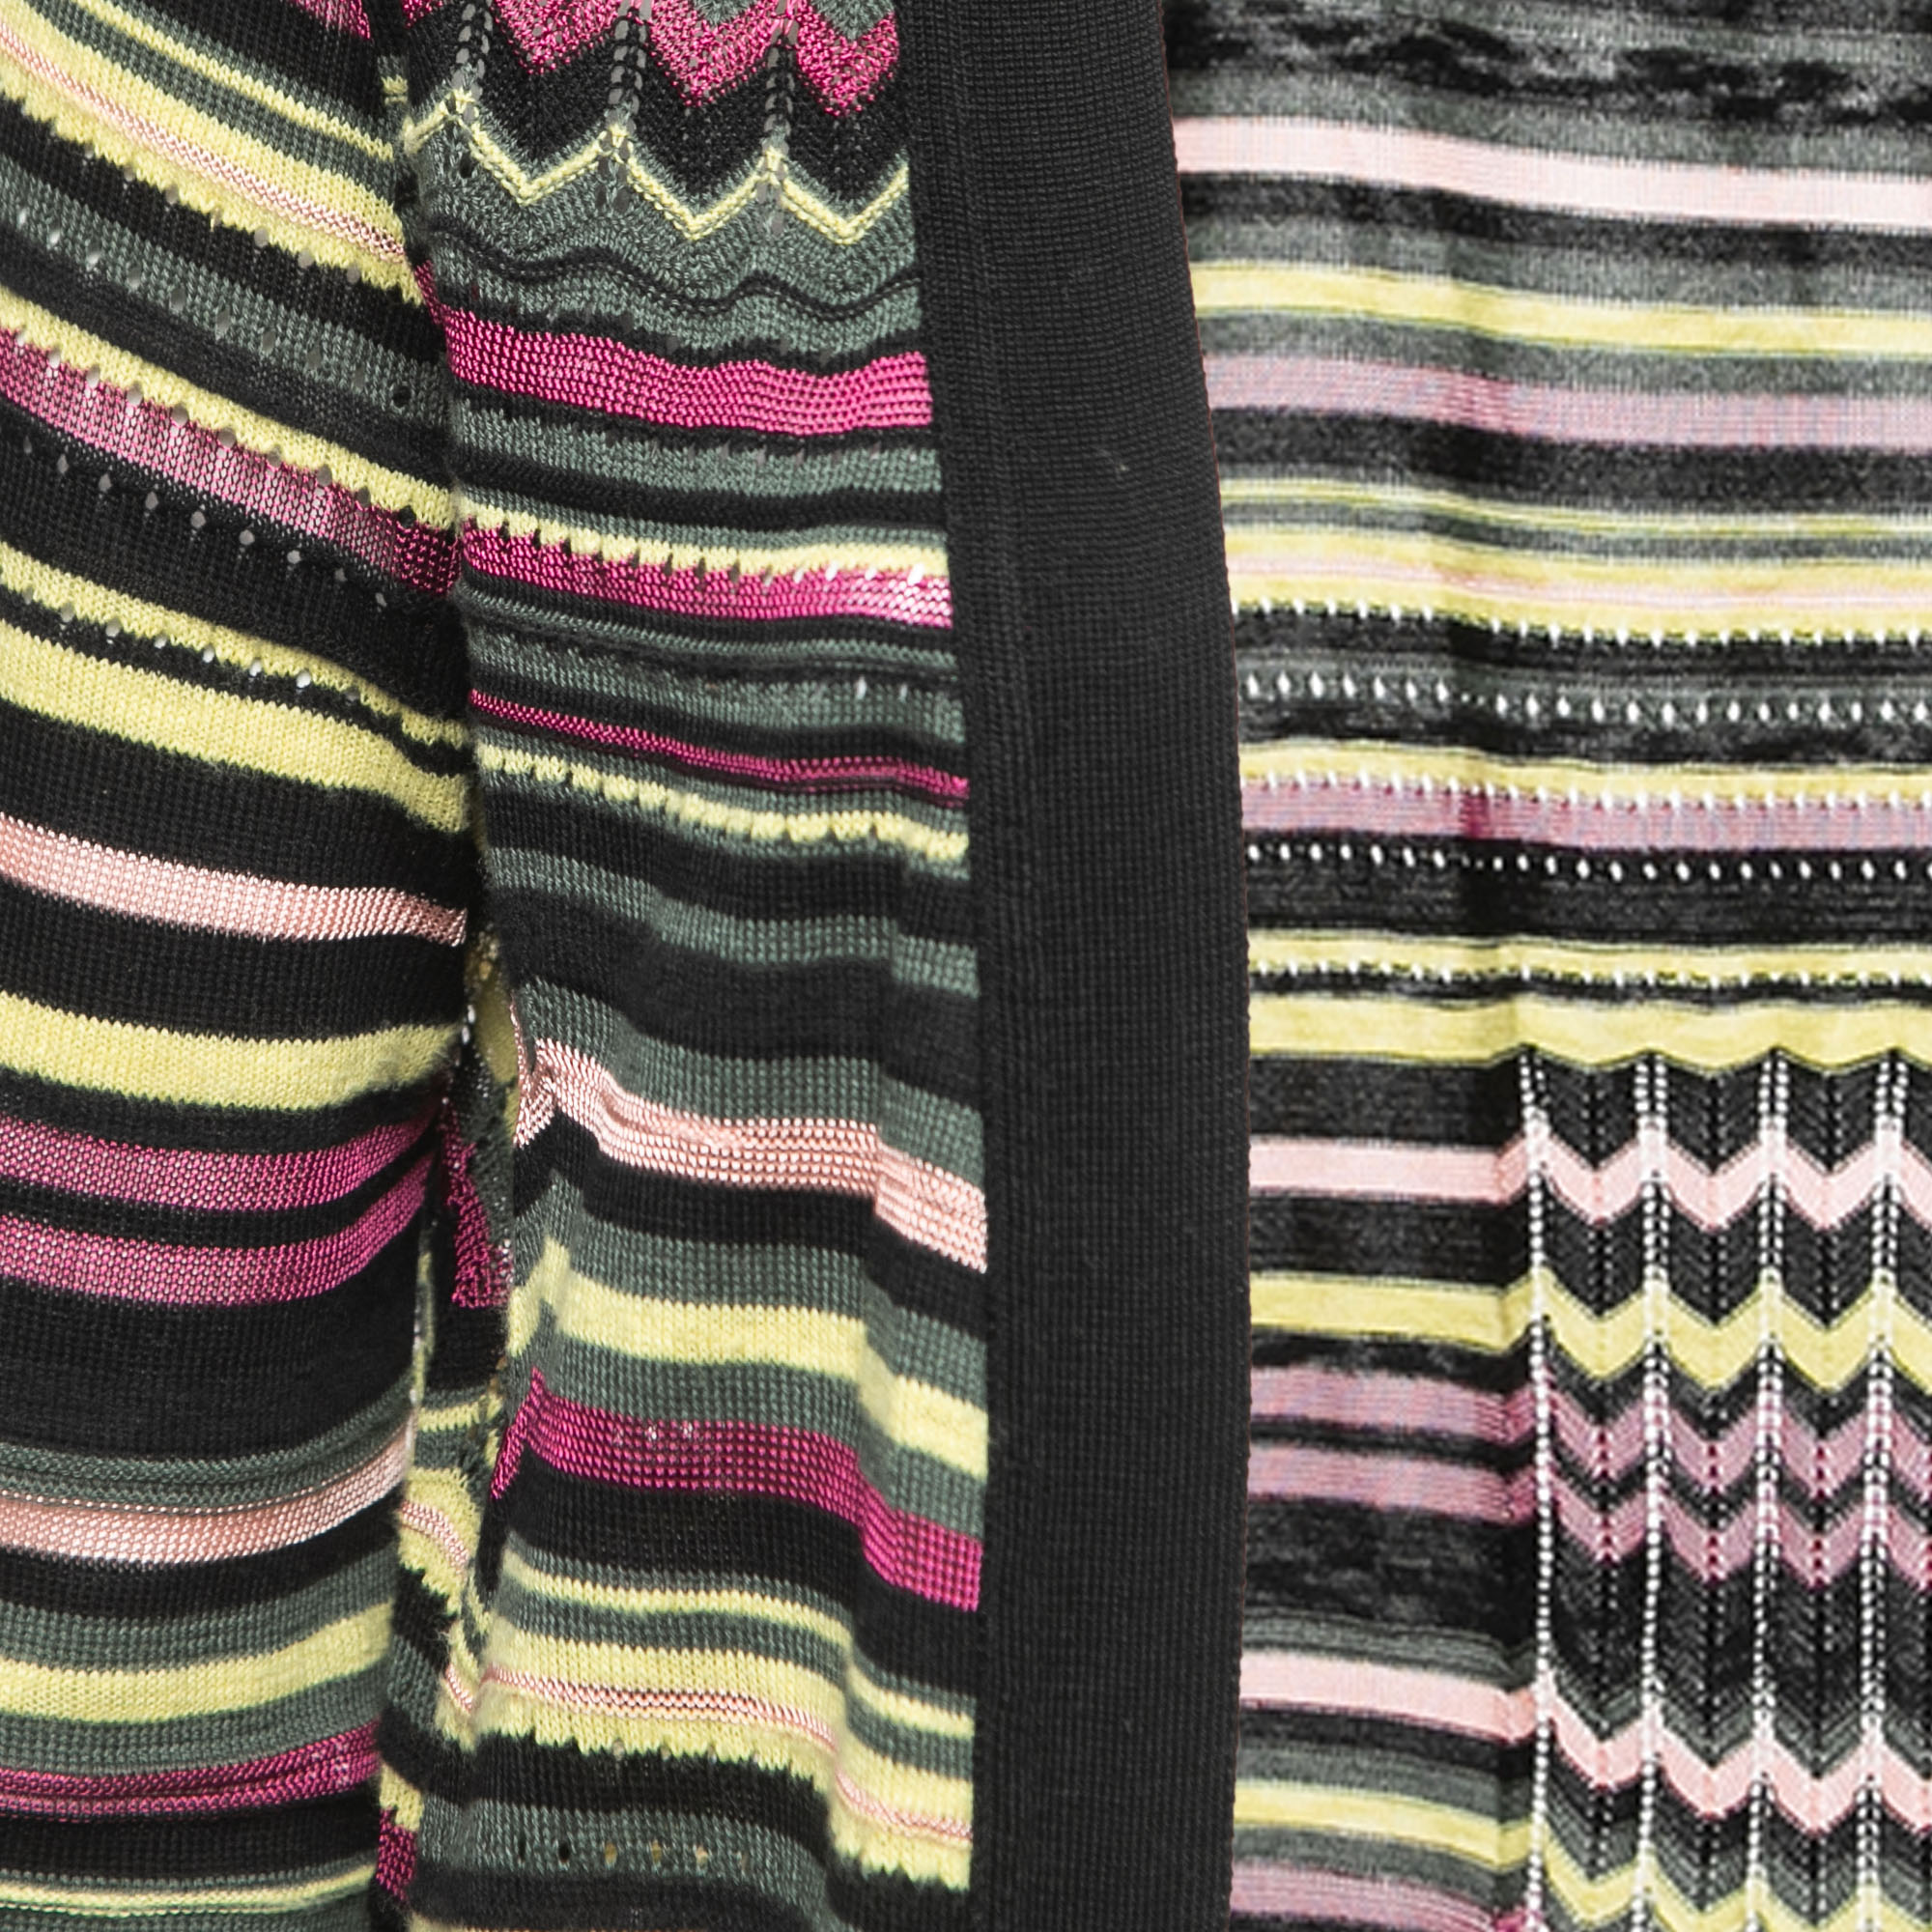 M Missoni Multicolor Patterned Knit Open Cardigan L